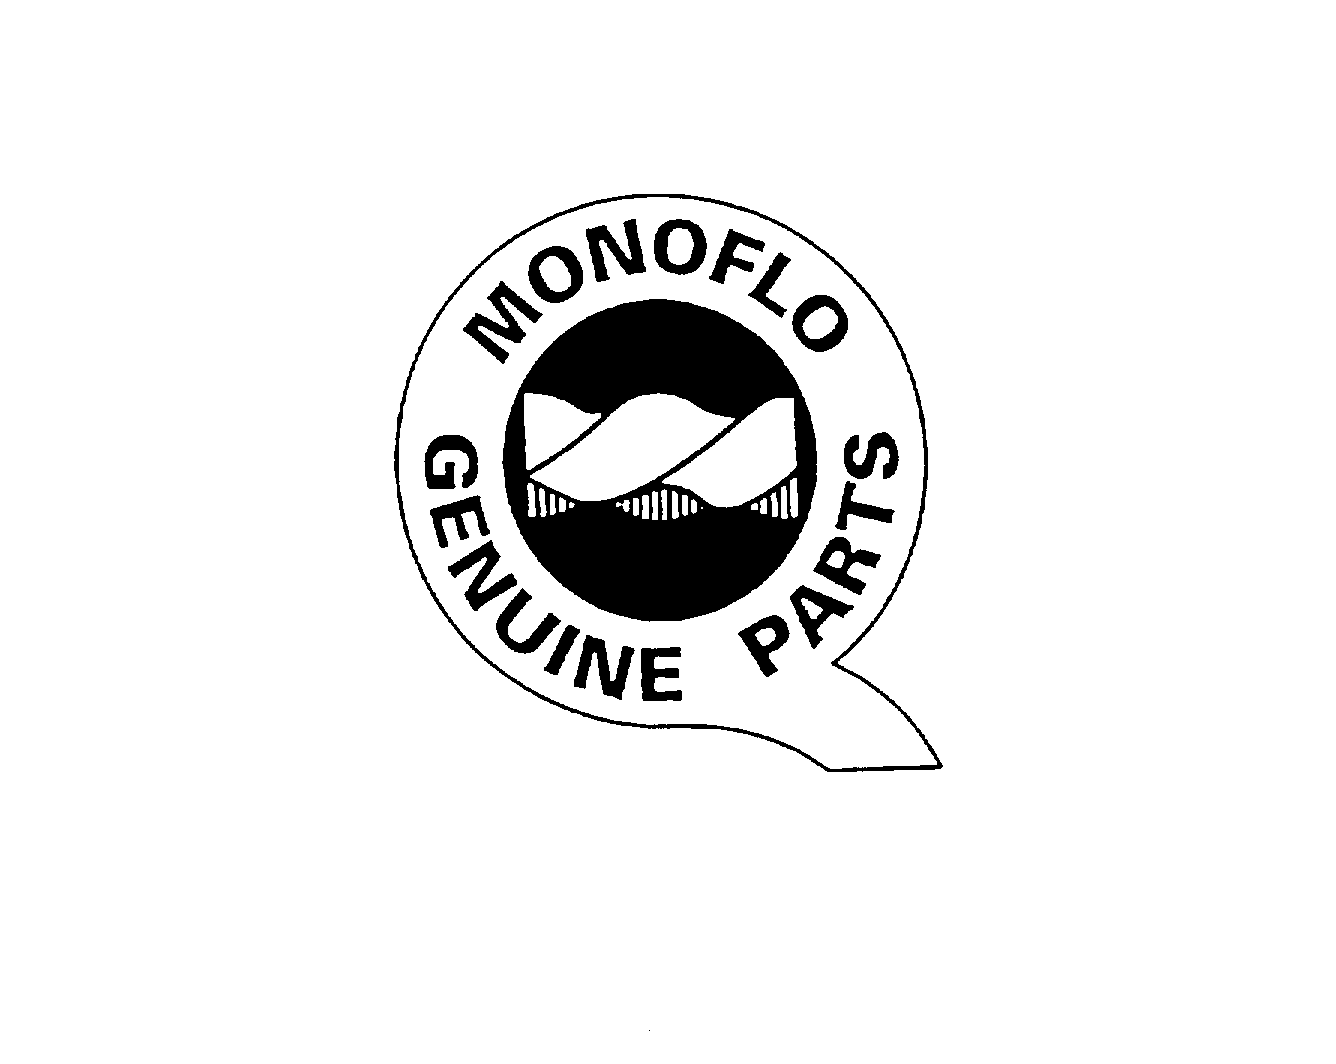  MONOFLO GENUINE PARTS